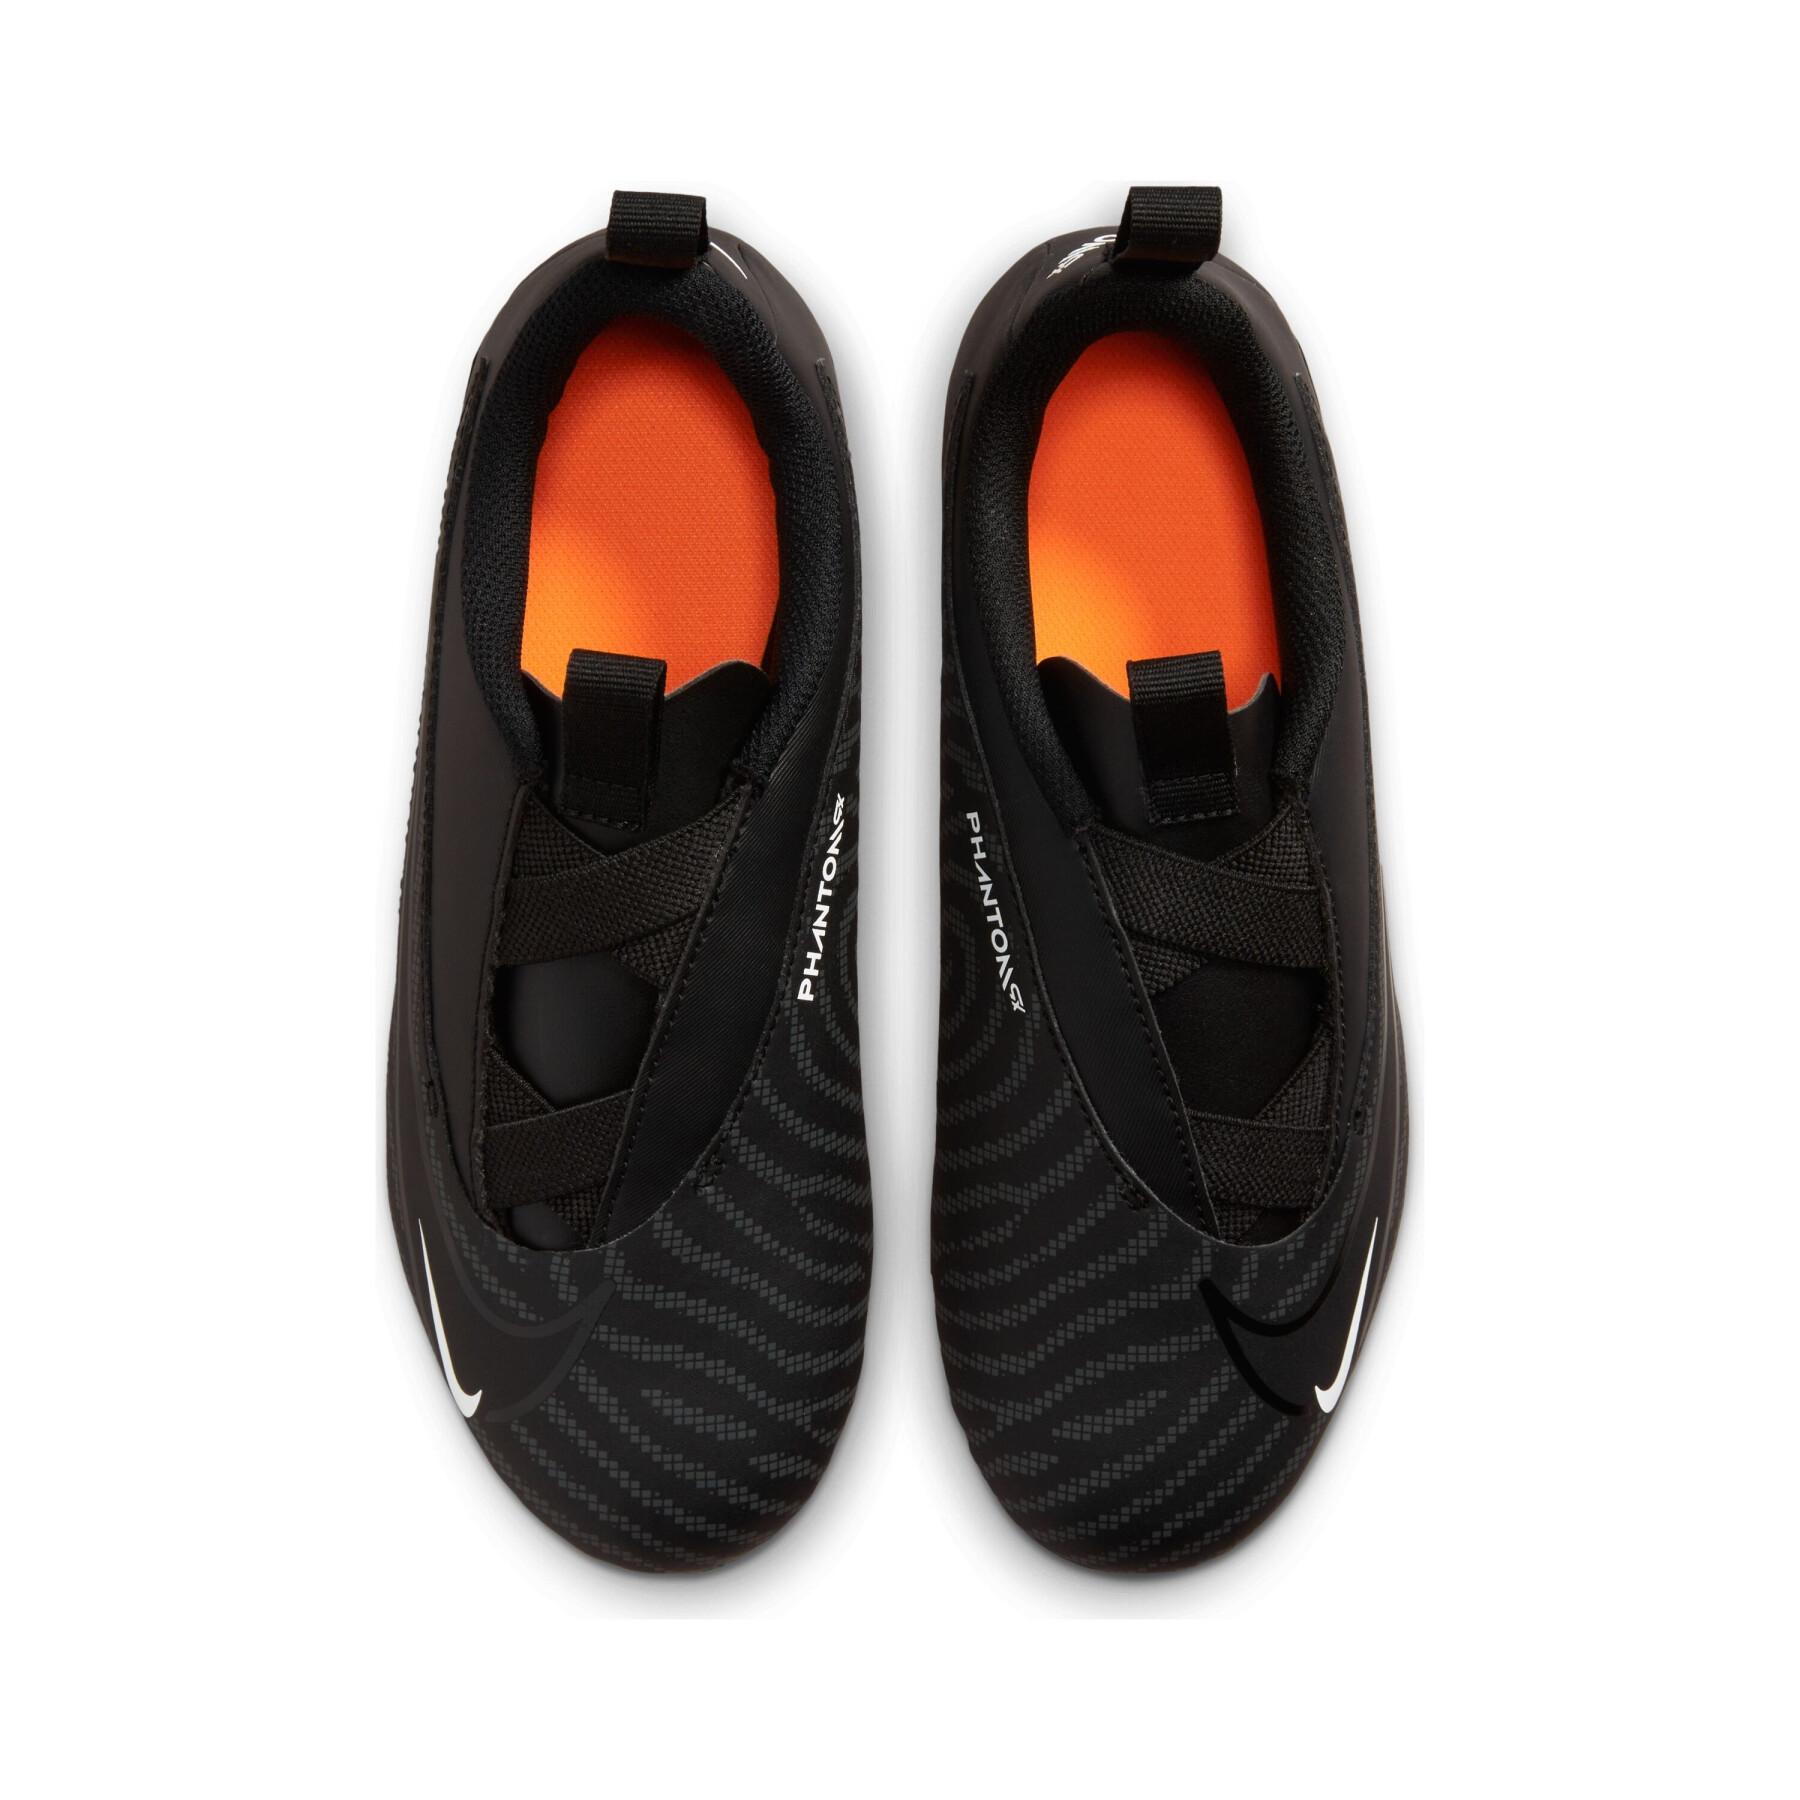 Children's soccer shoes Nike Phantom GX Academy MG - Black Pack